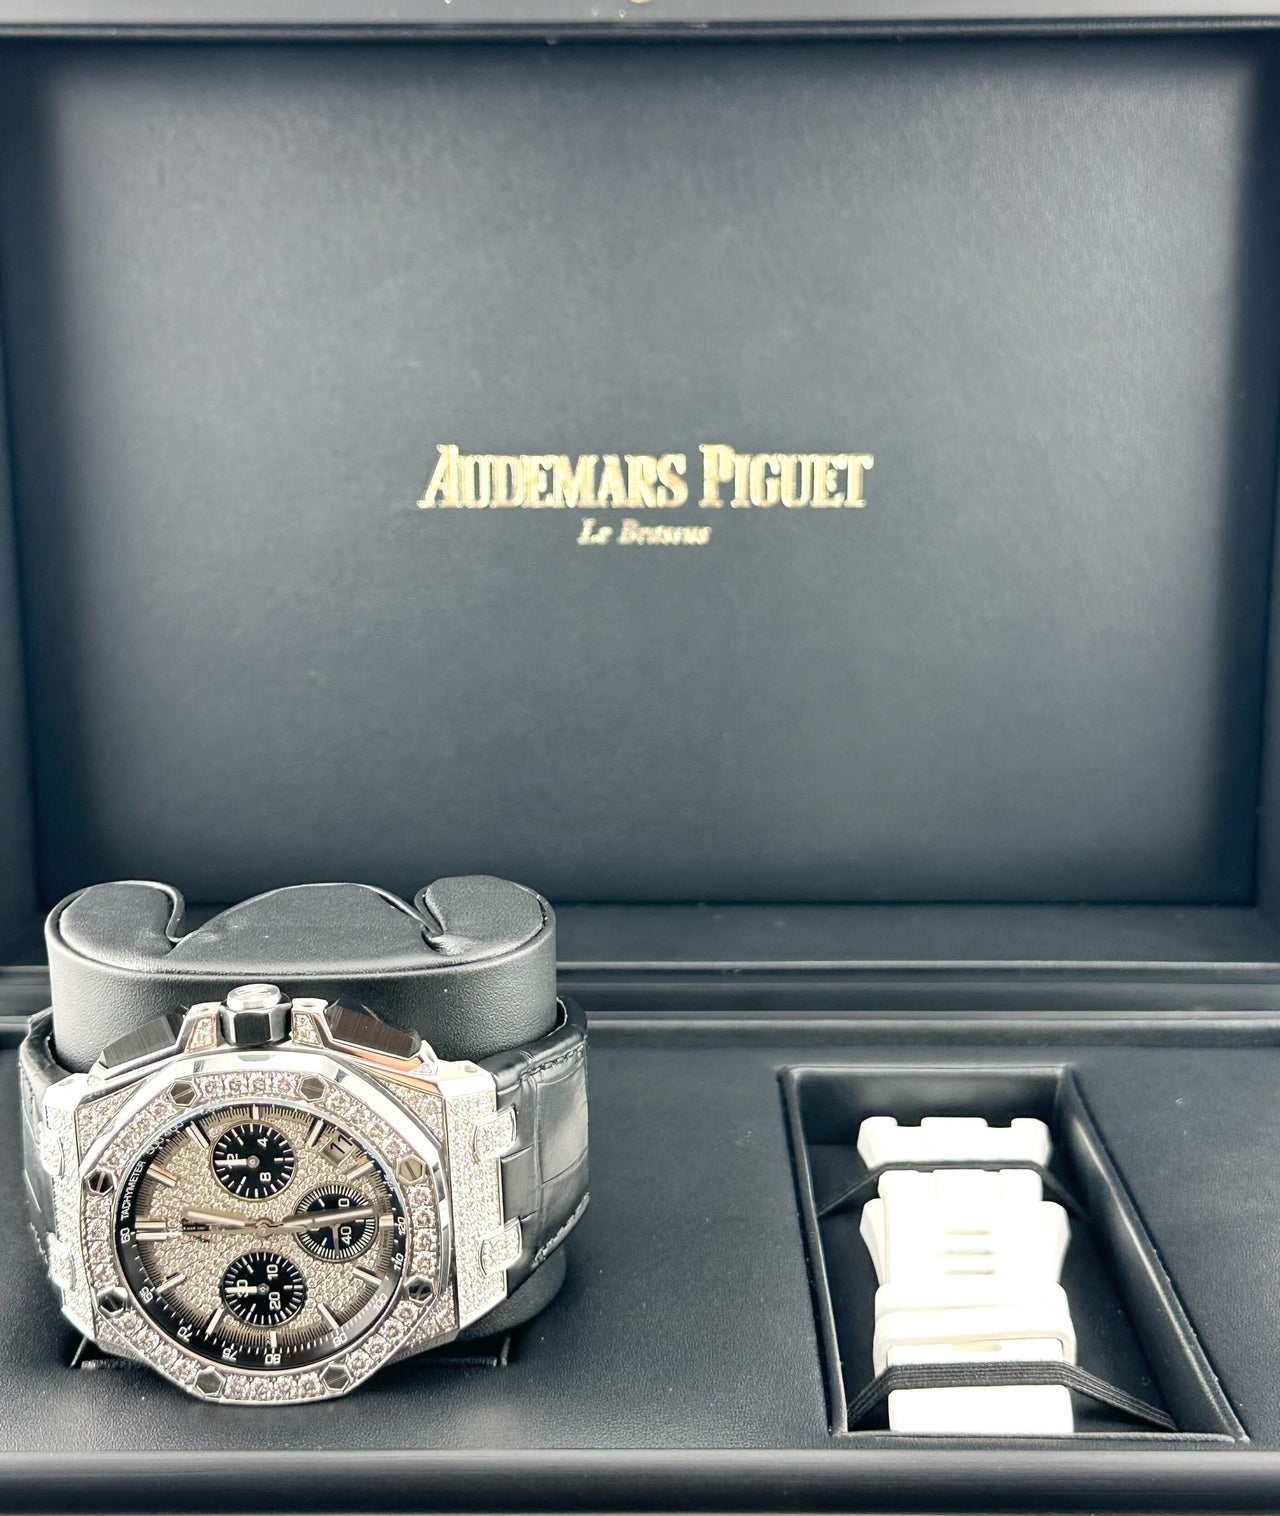 Luxury Watch Audemars Piguet Royal Oak Offshore Selfwinding Chronograph Diamond 26423BC.ZZ.D002CA.01 Wrist Aficionado